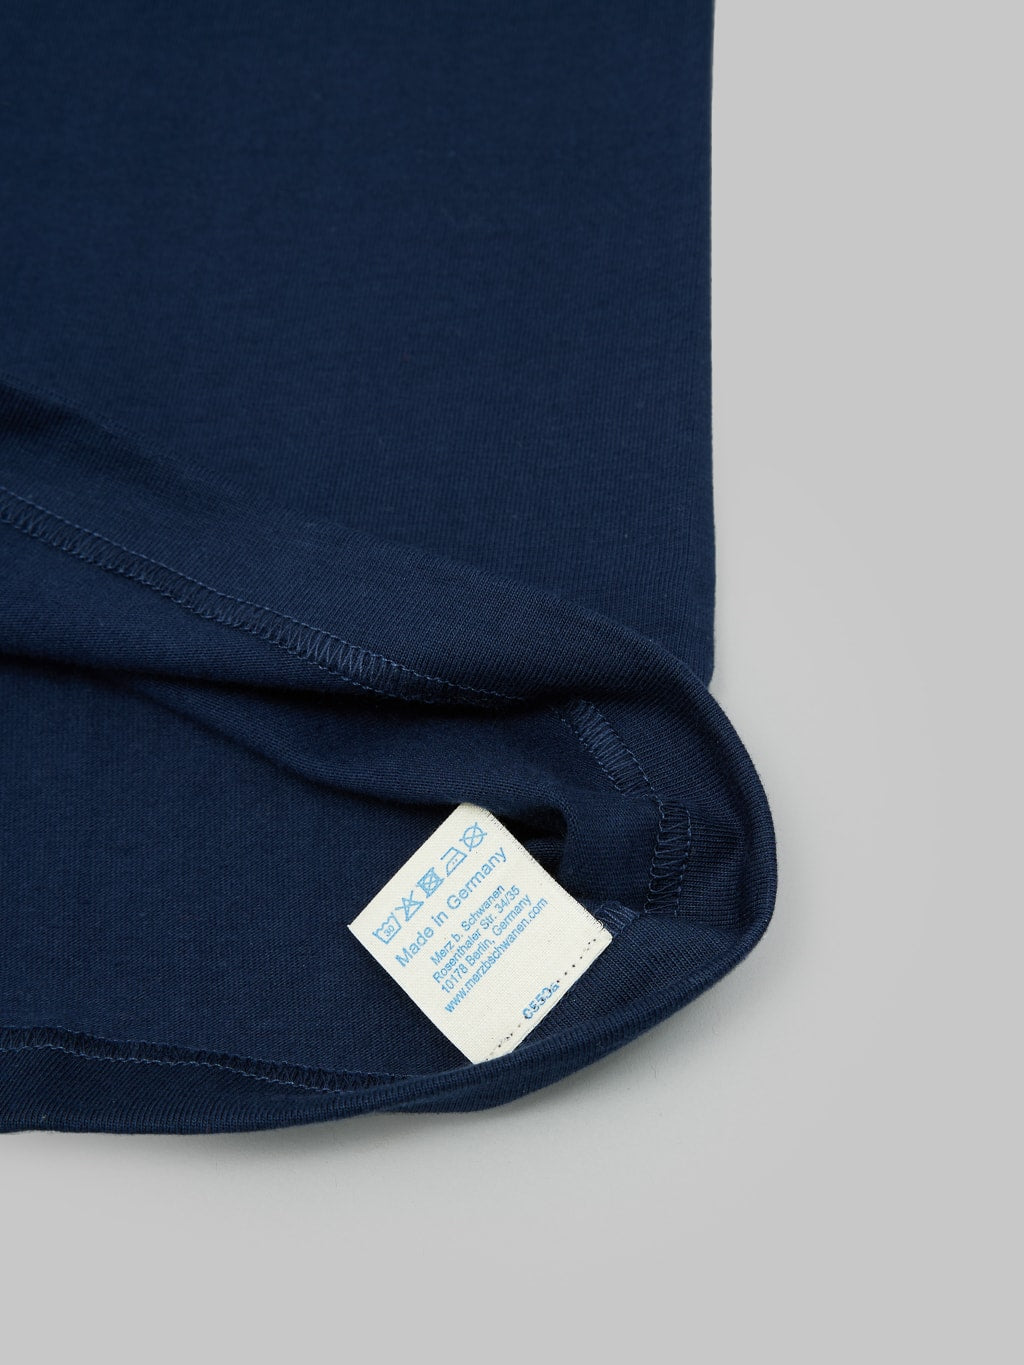 merz b schwanen good originals loopwheeled Tshirt classic fit blue interior fabric